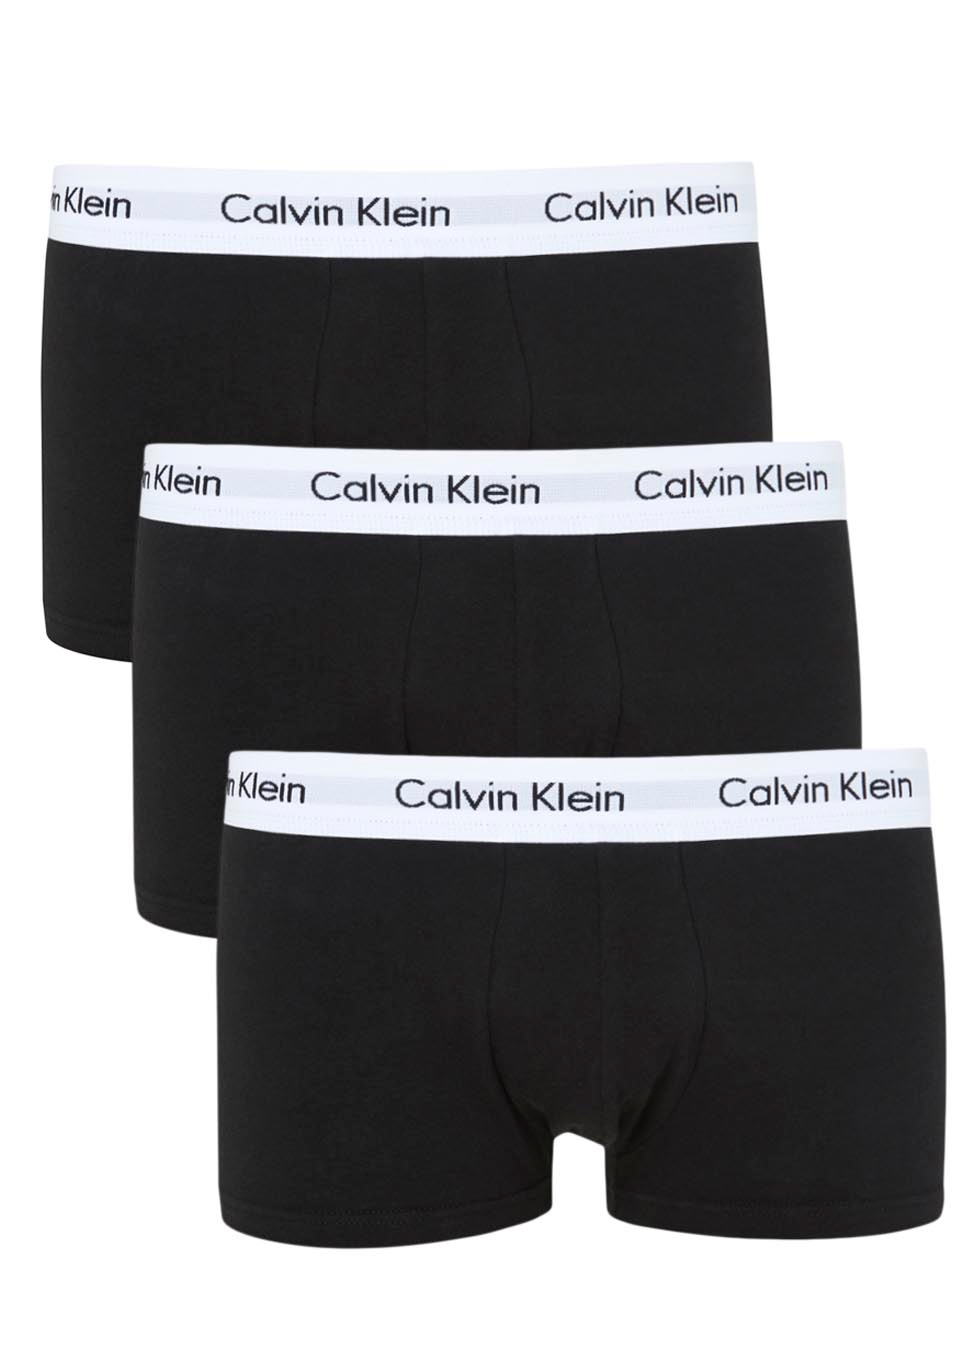 Calvin Klein Black stretch cotton trunks - set of three - Harvey Nichols